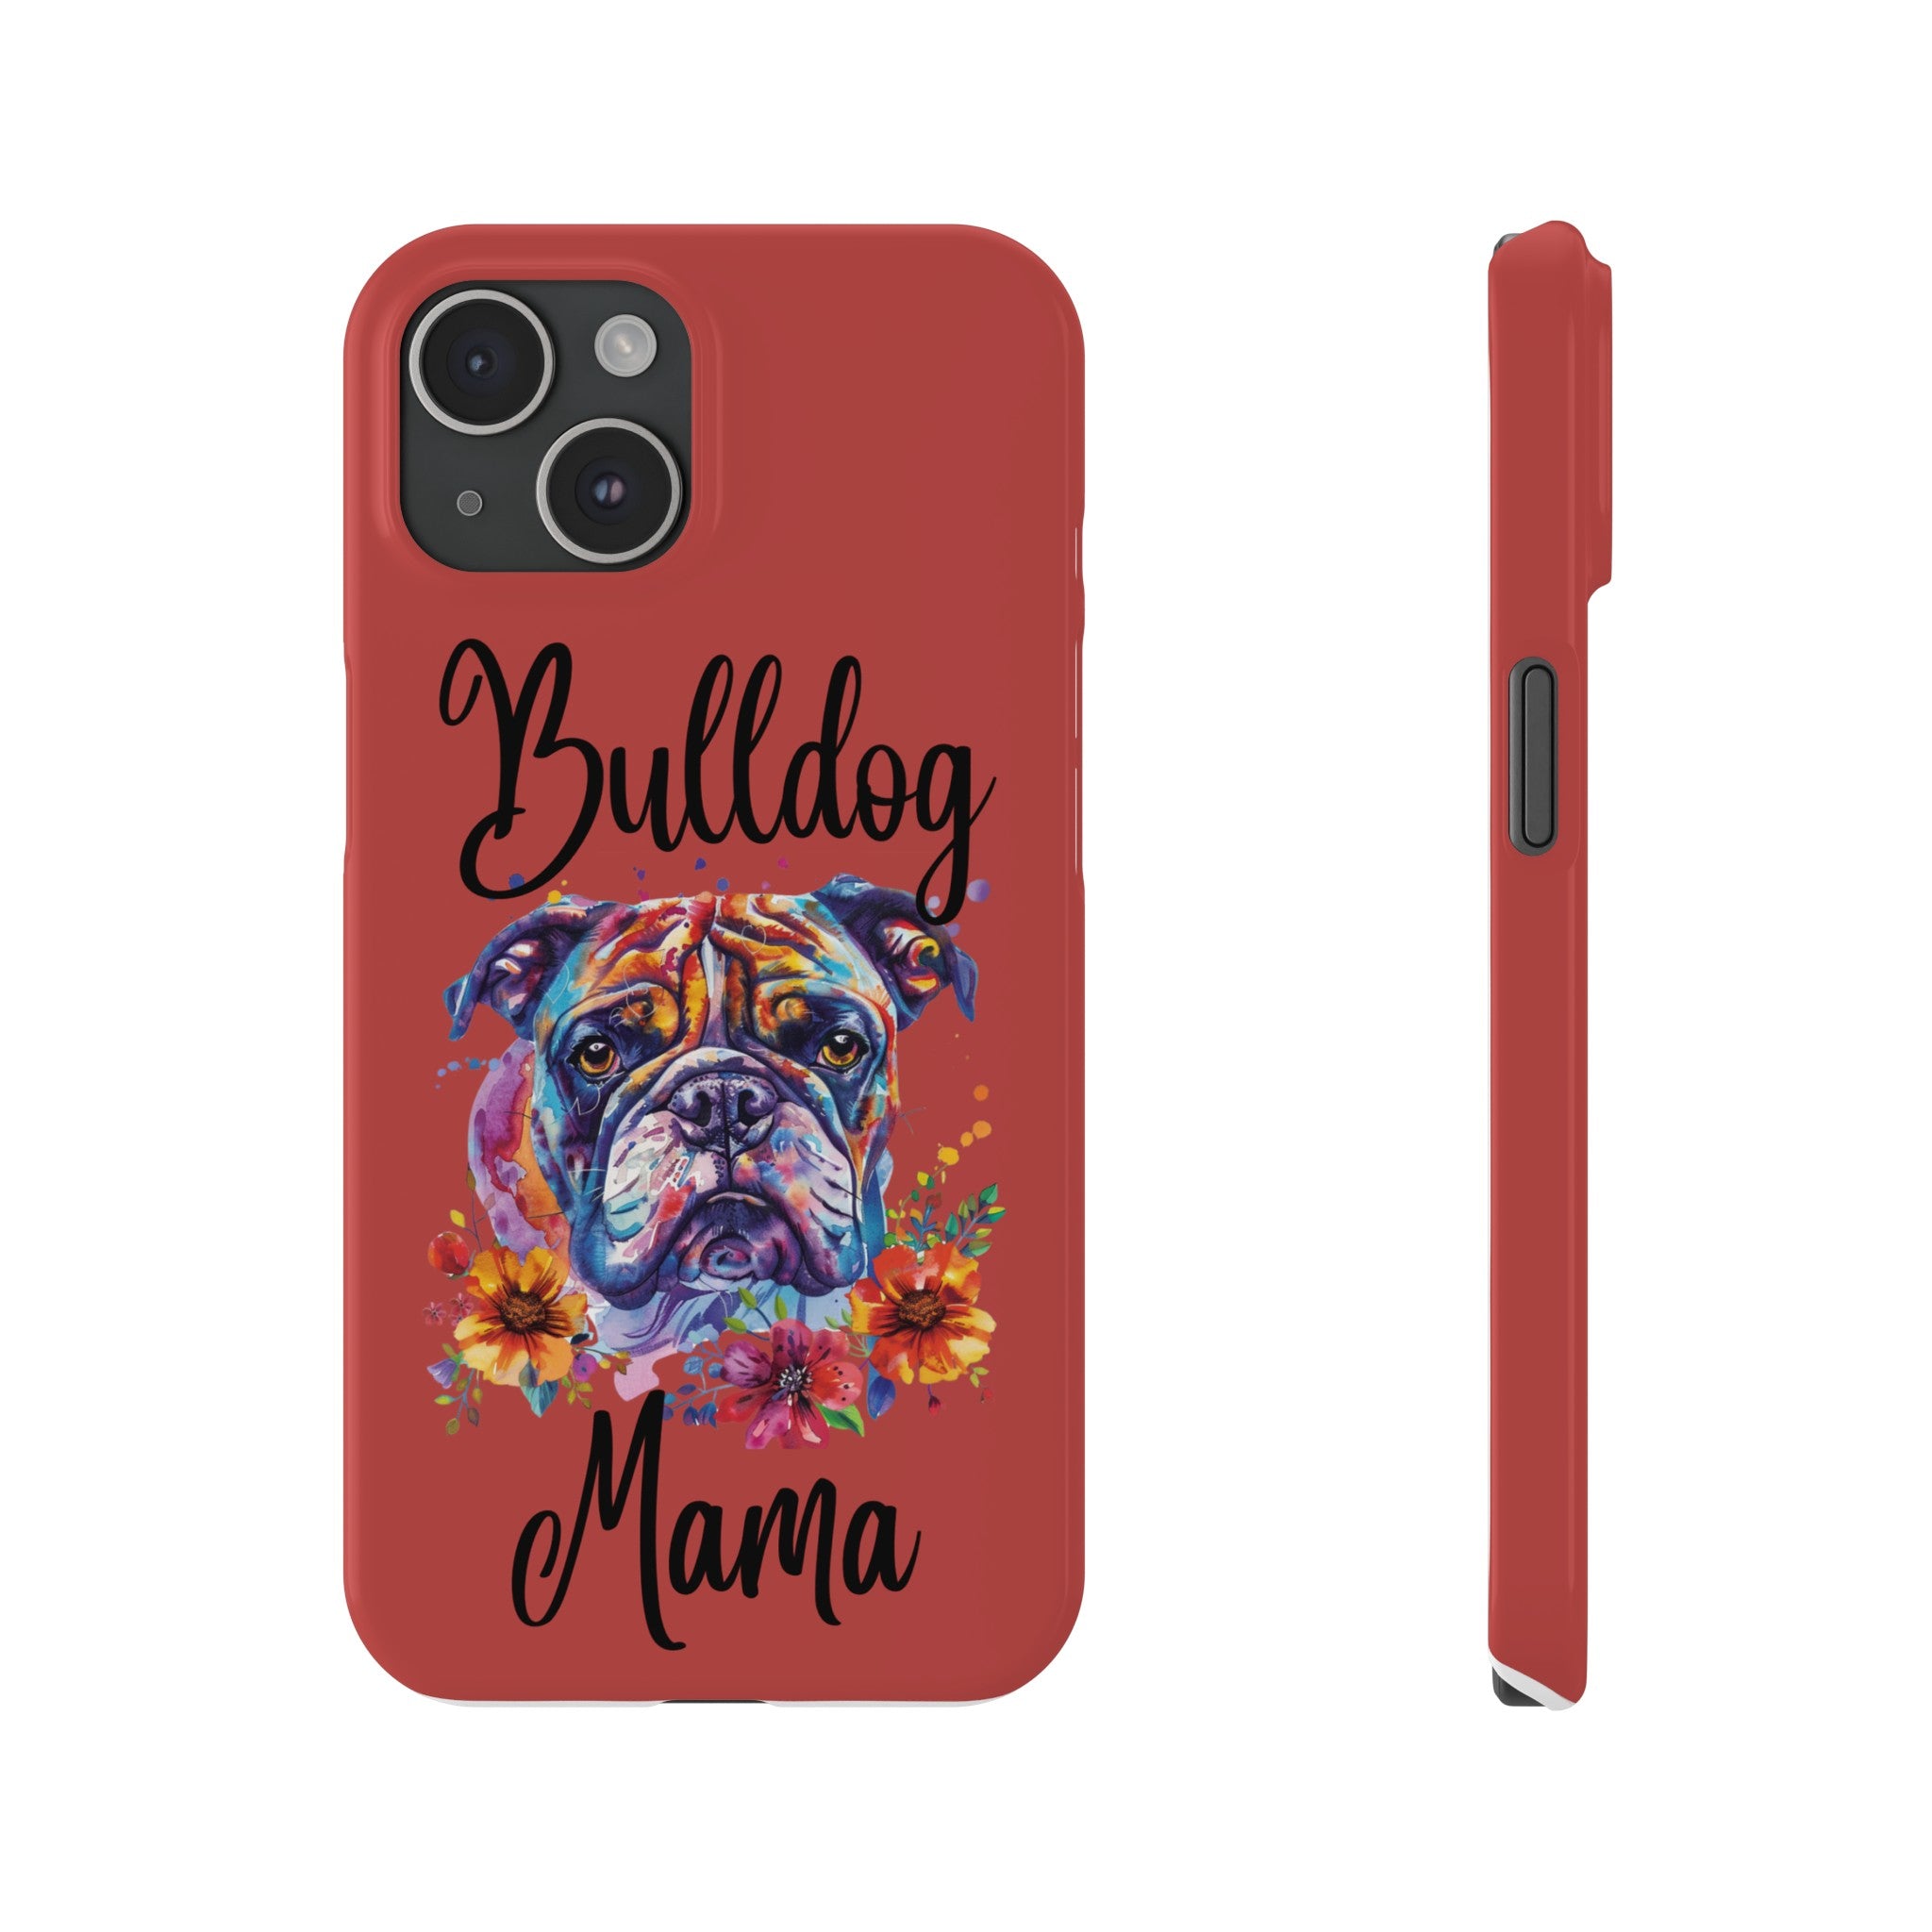 Bulldog iPhone Cases (Engish/Watercolor)